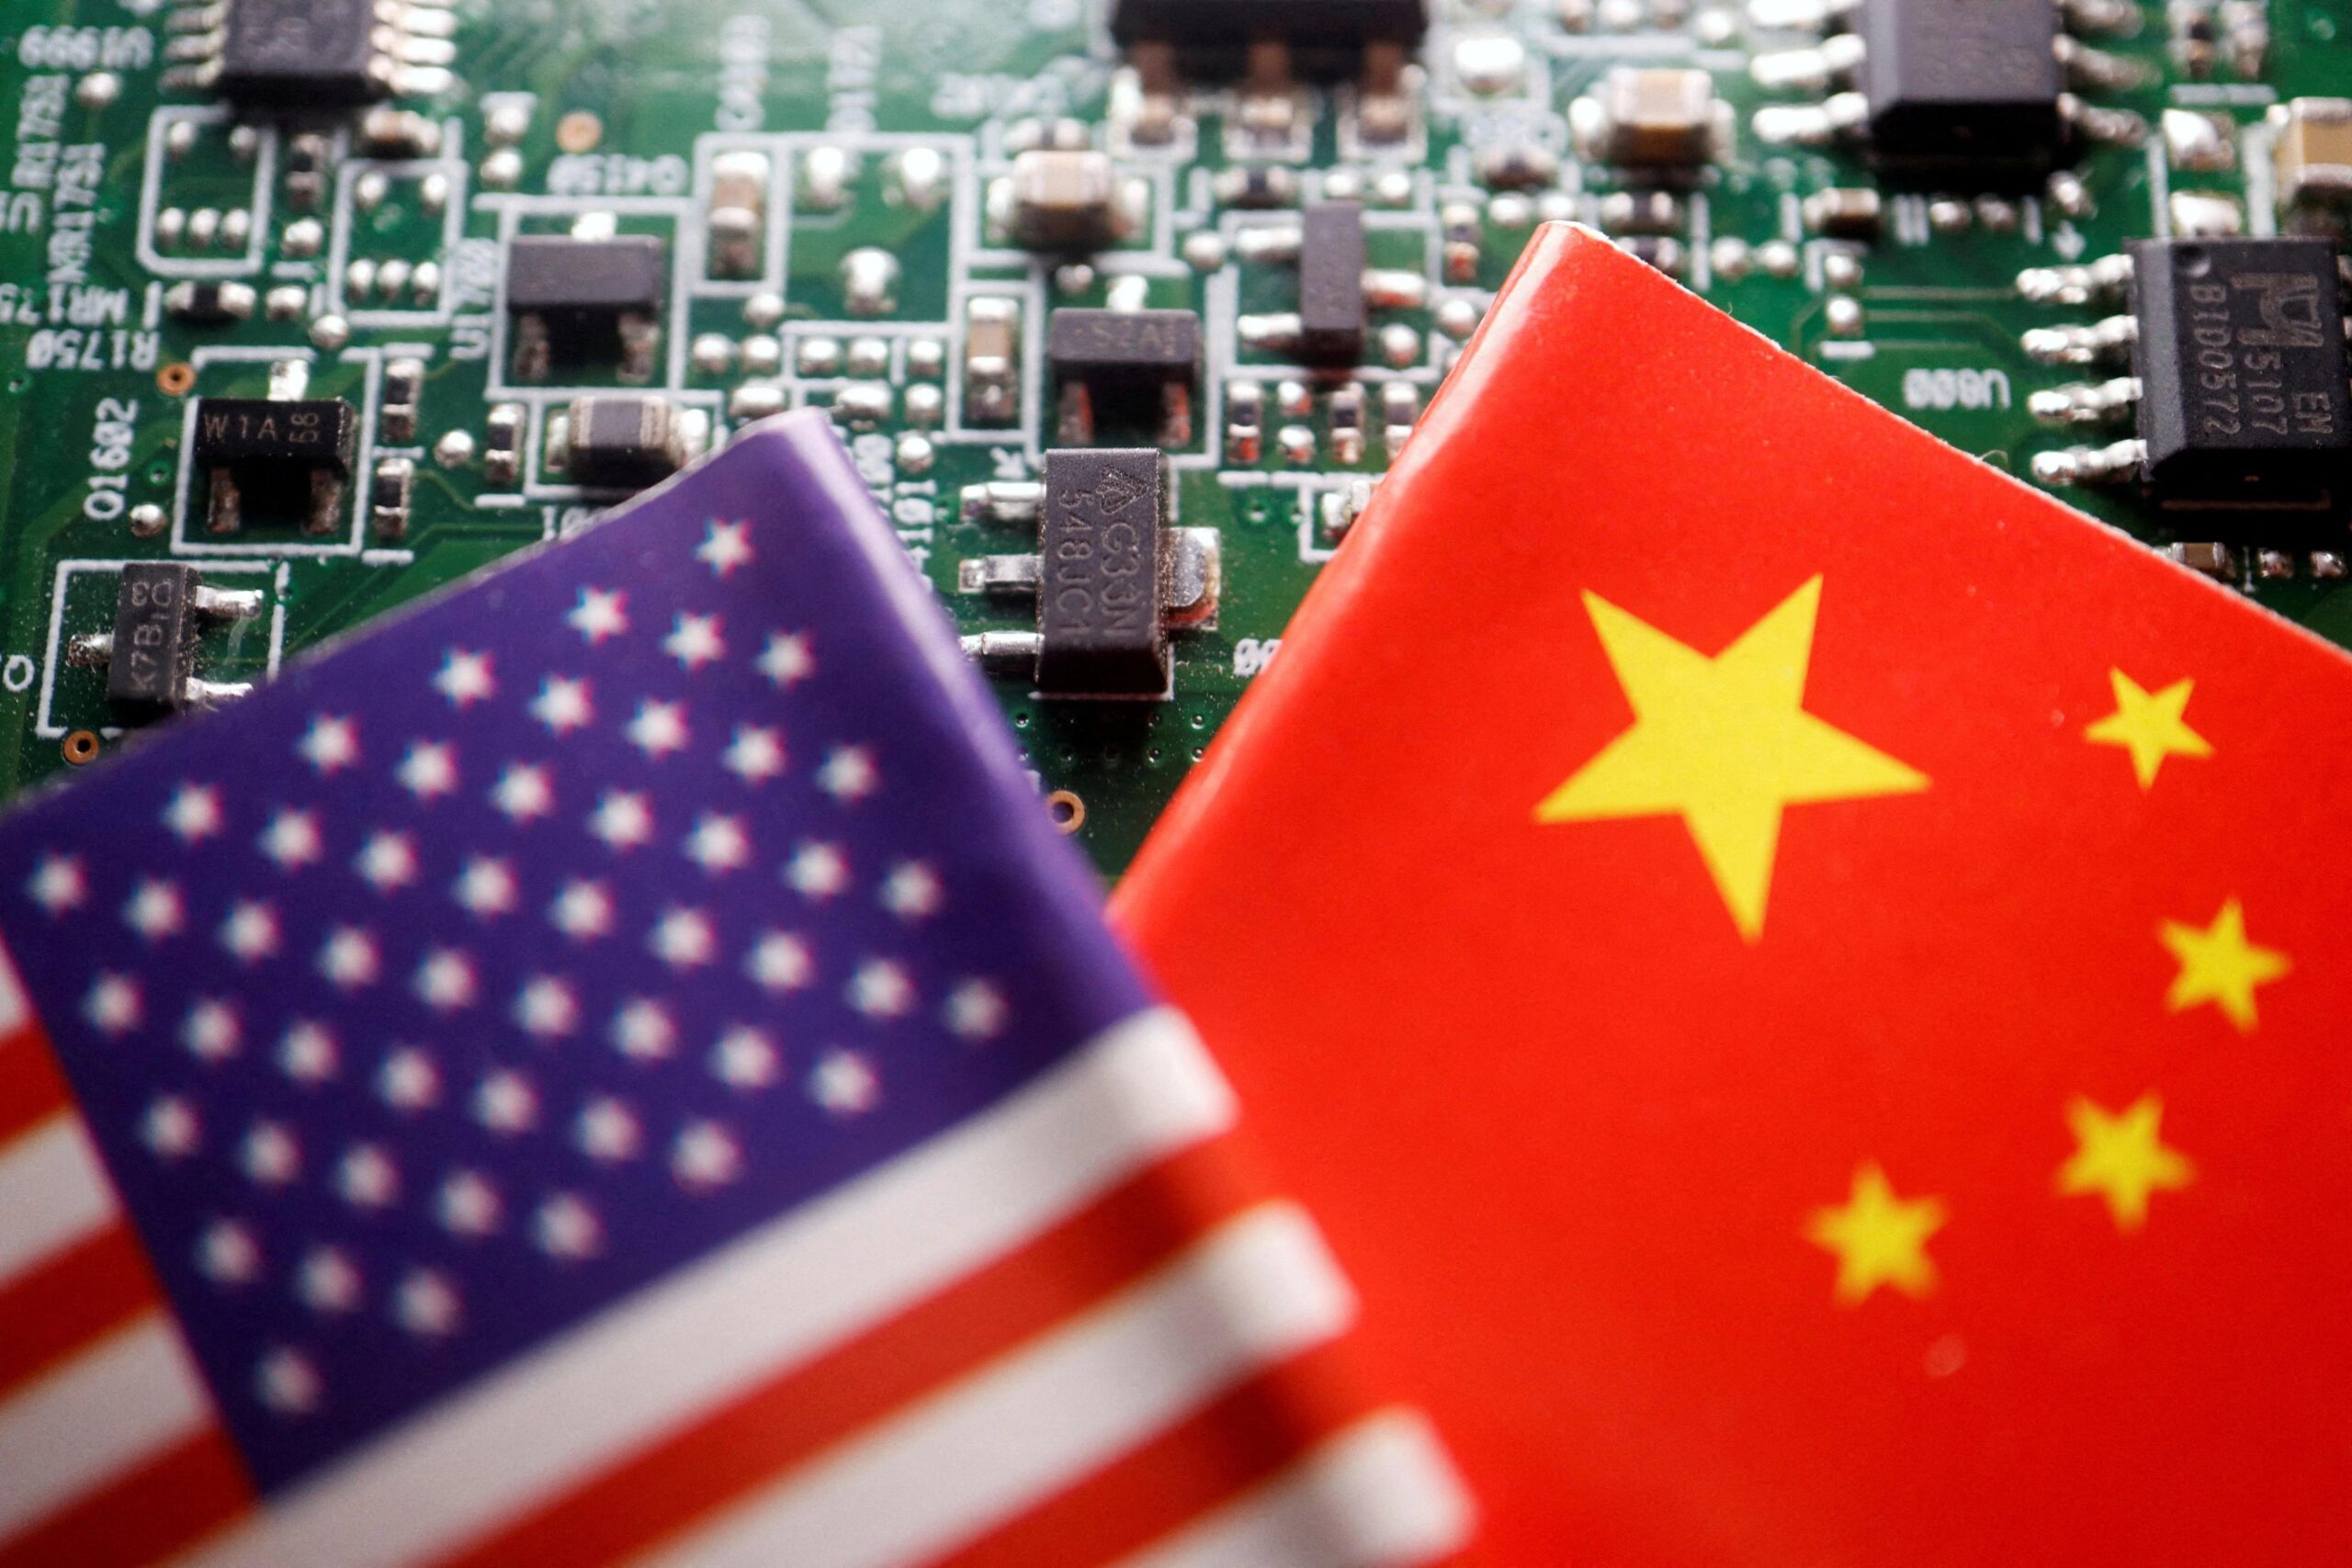 RISC-V technology emerges as battleground in US-China tech war